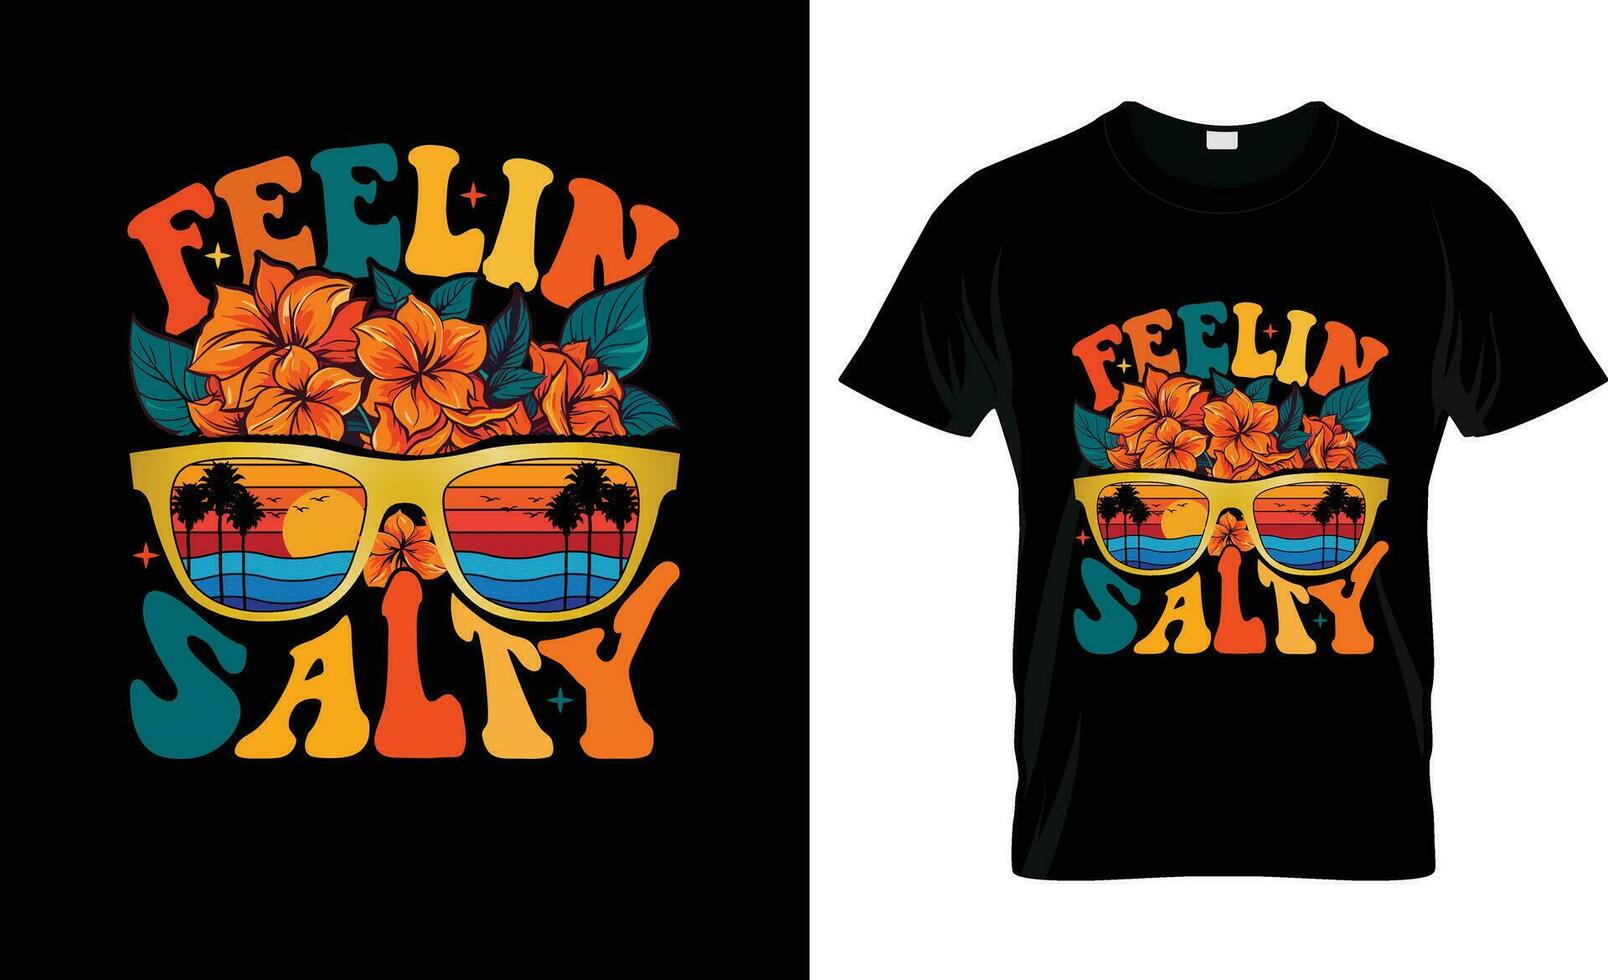 Feelin Salty colorful Graphic T-Shirt,t-shirt print mockup vector